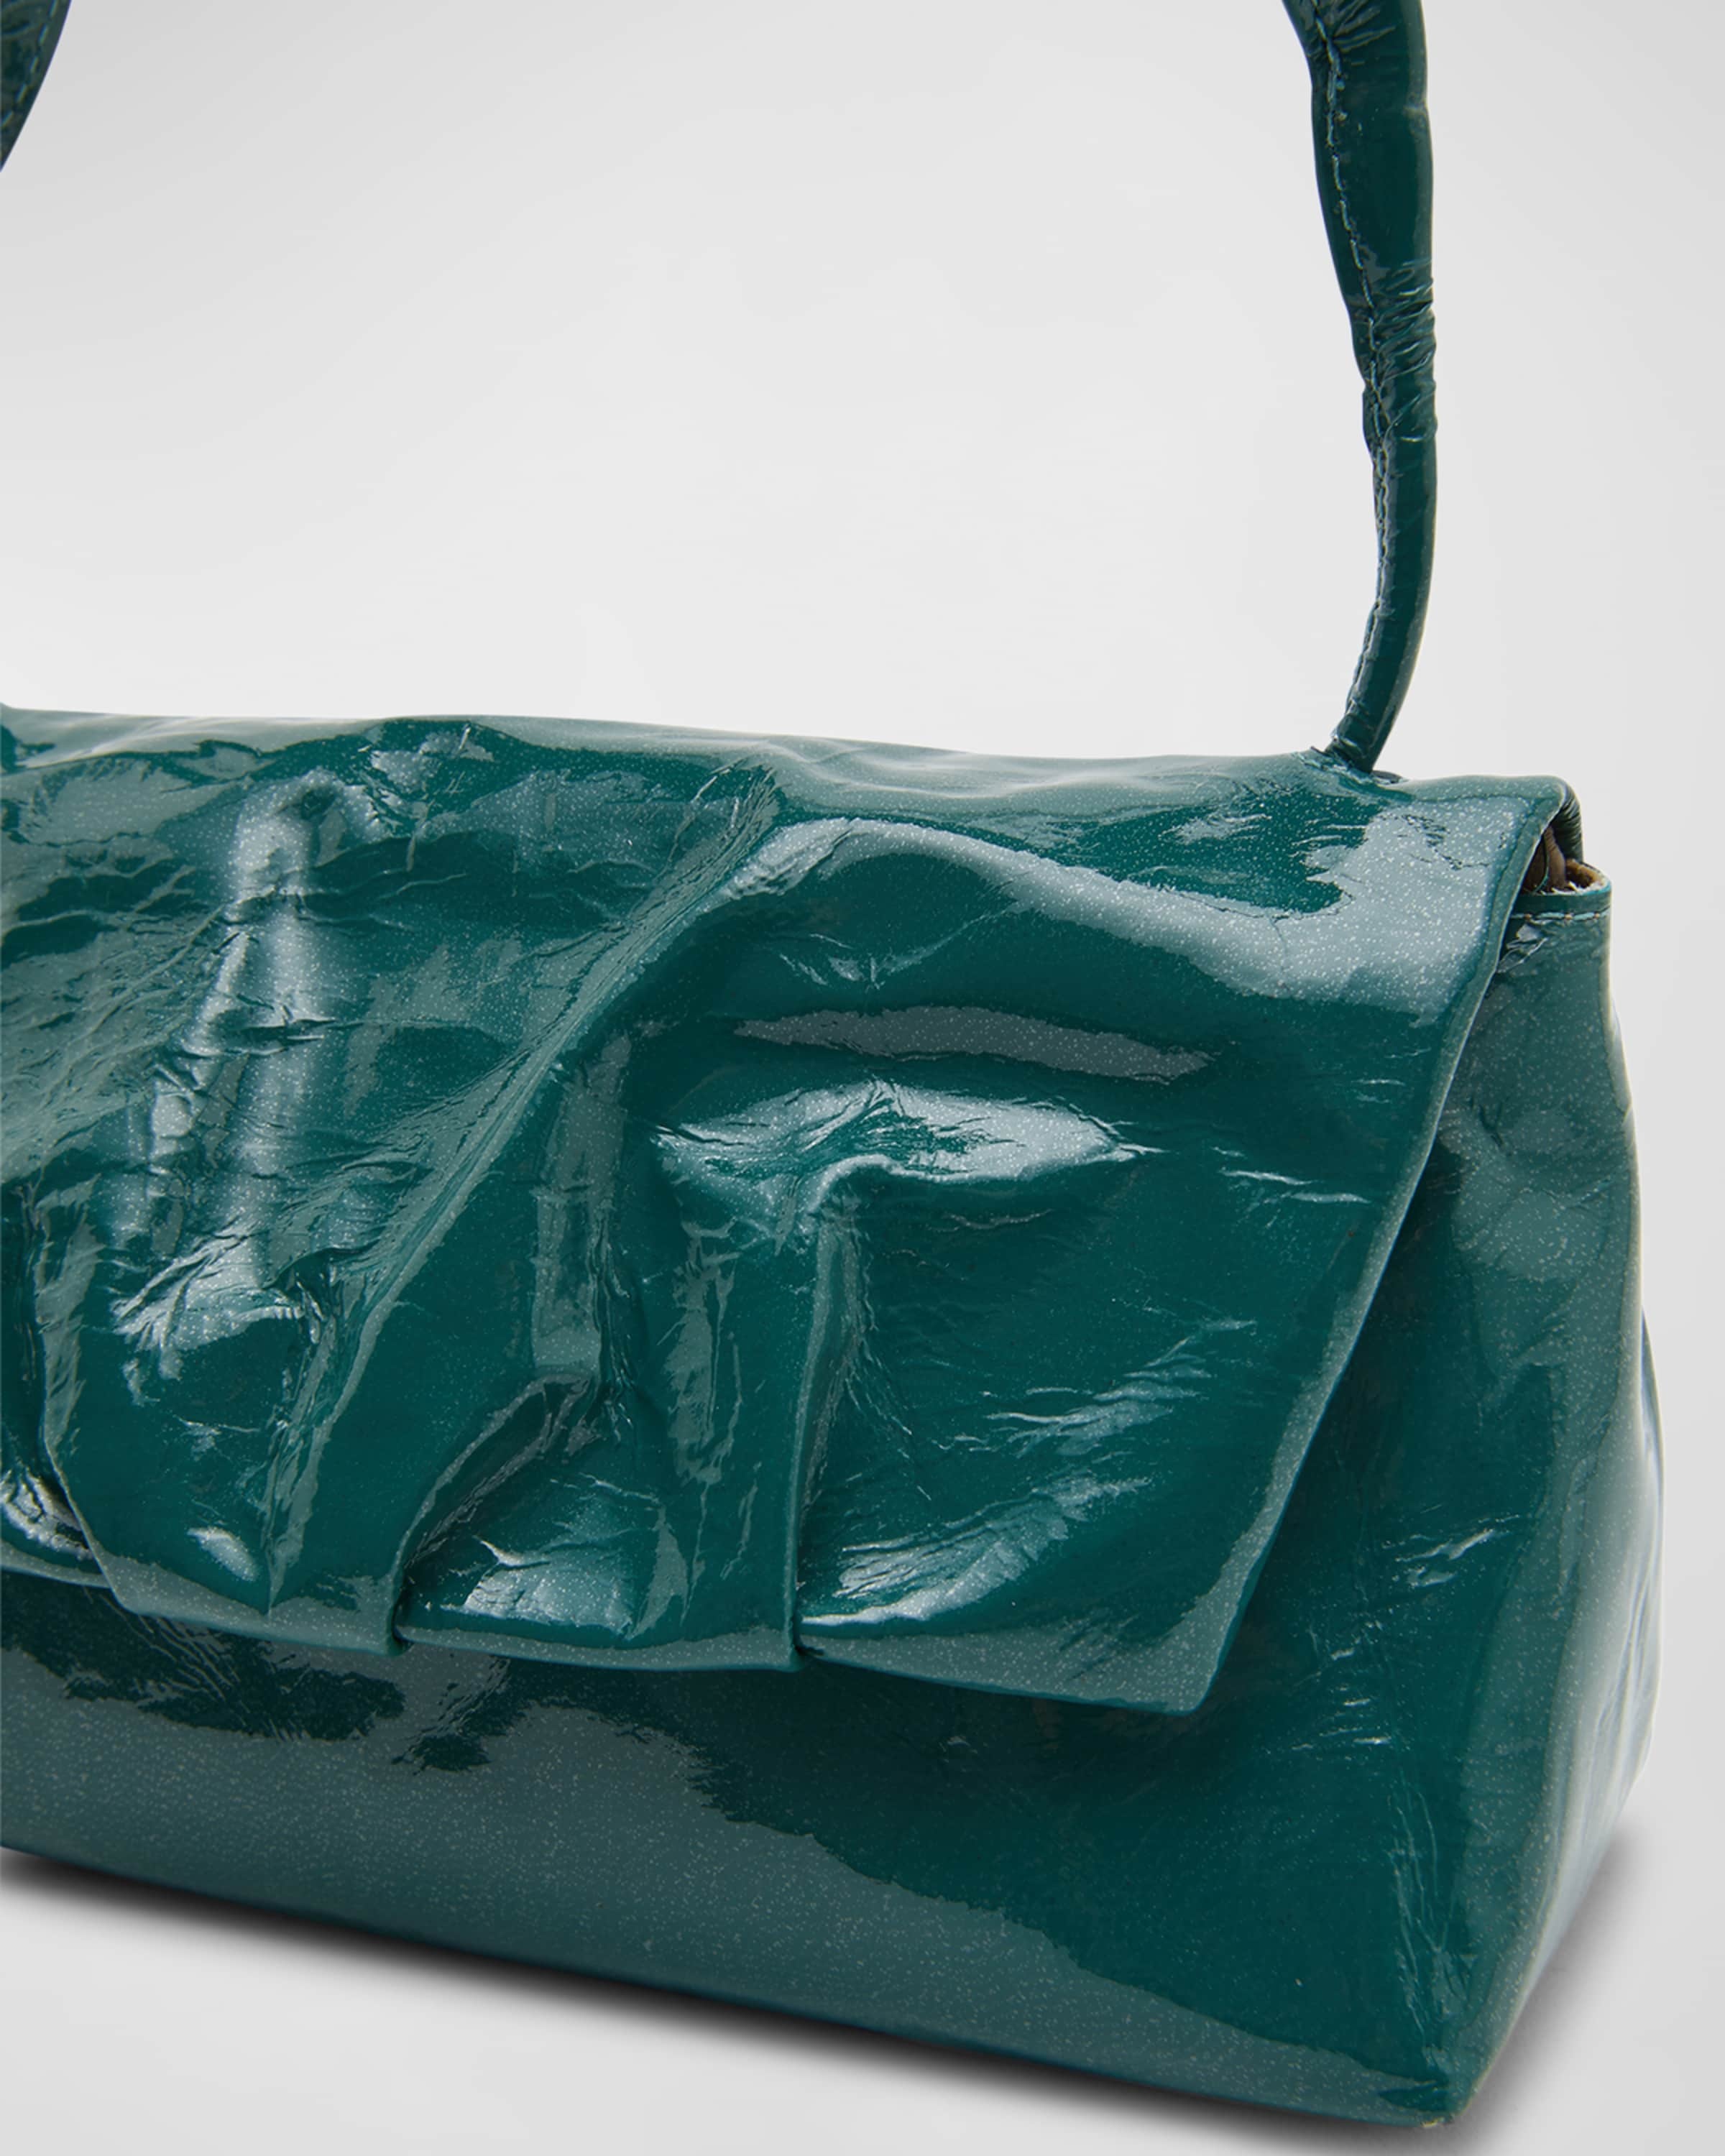 Dries Van Noten Small Flap Patent Leather Shoulder Bag | REVERSIBLE